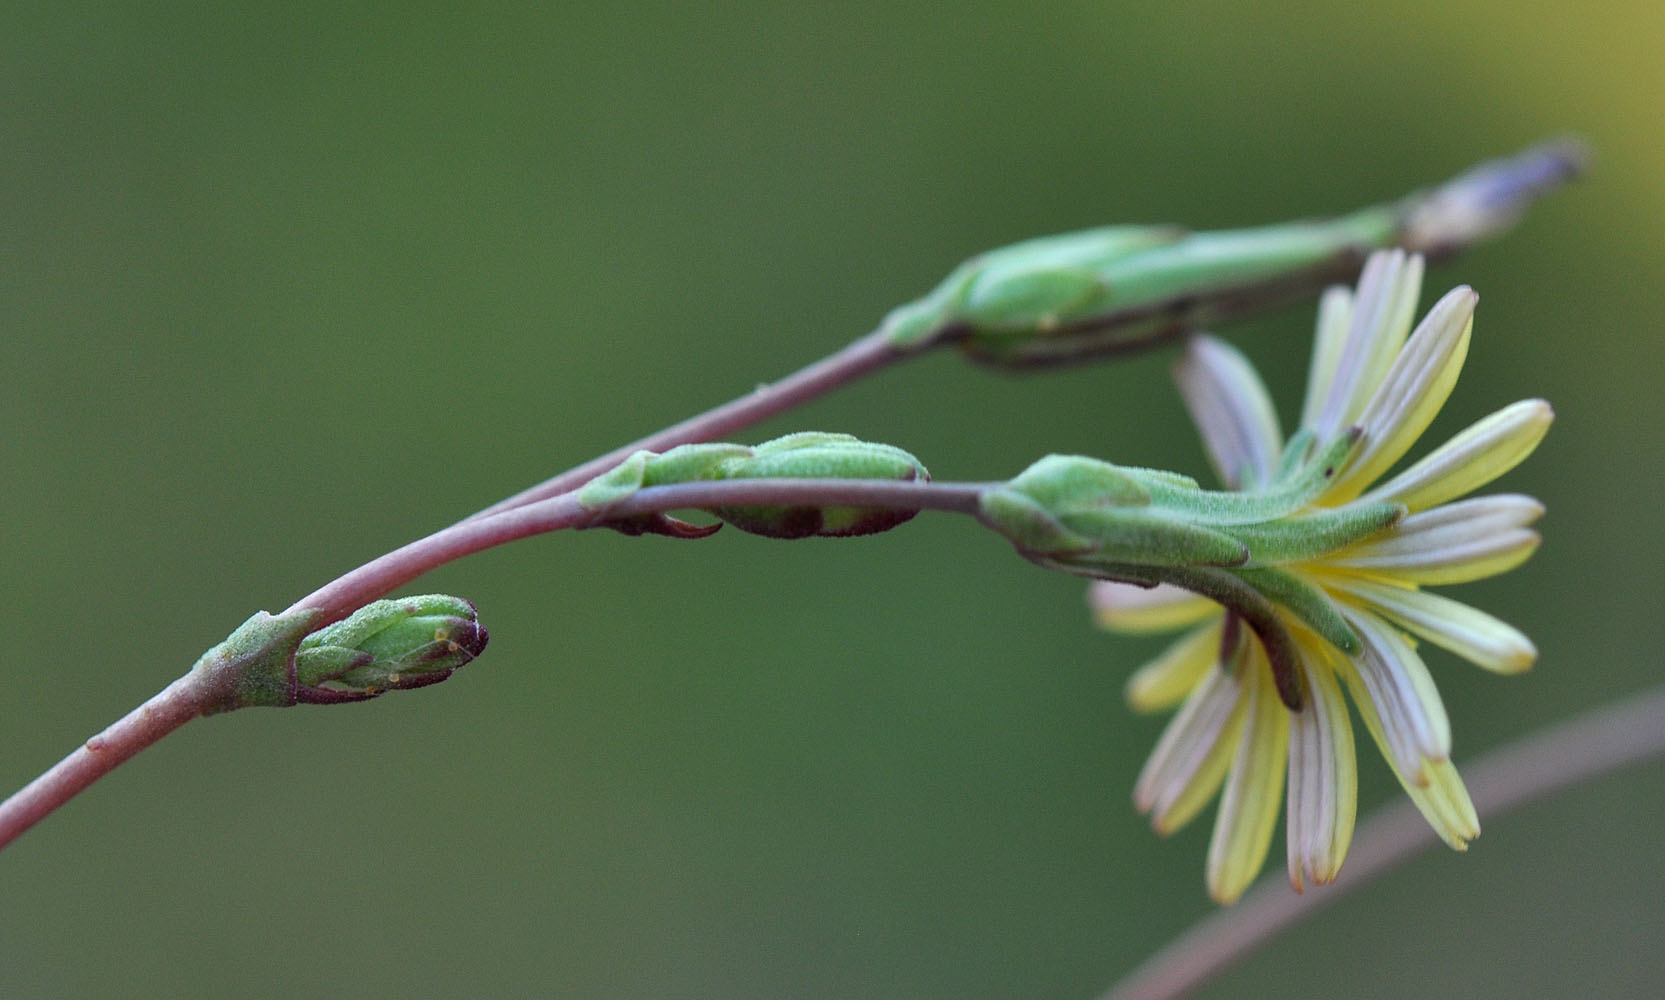 Flora of Eastern Washington Image: Lactuca serriola